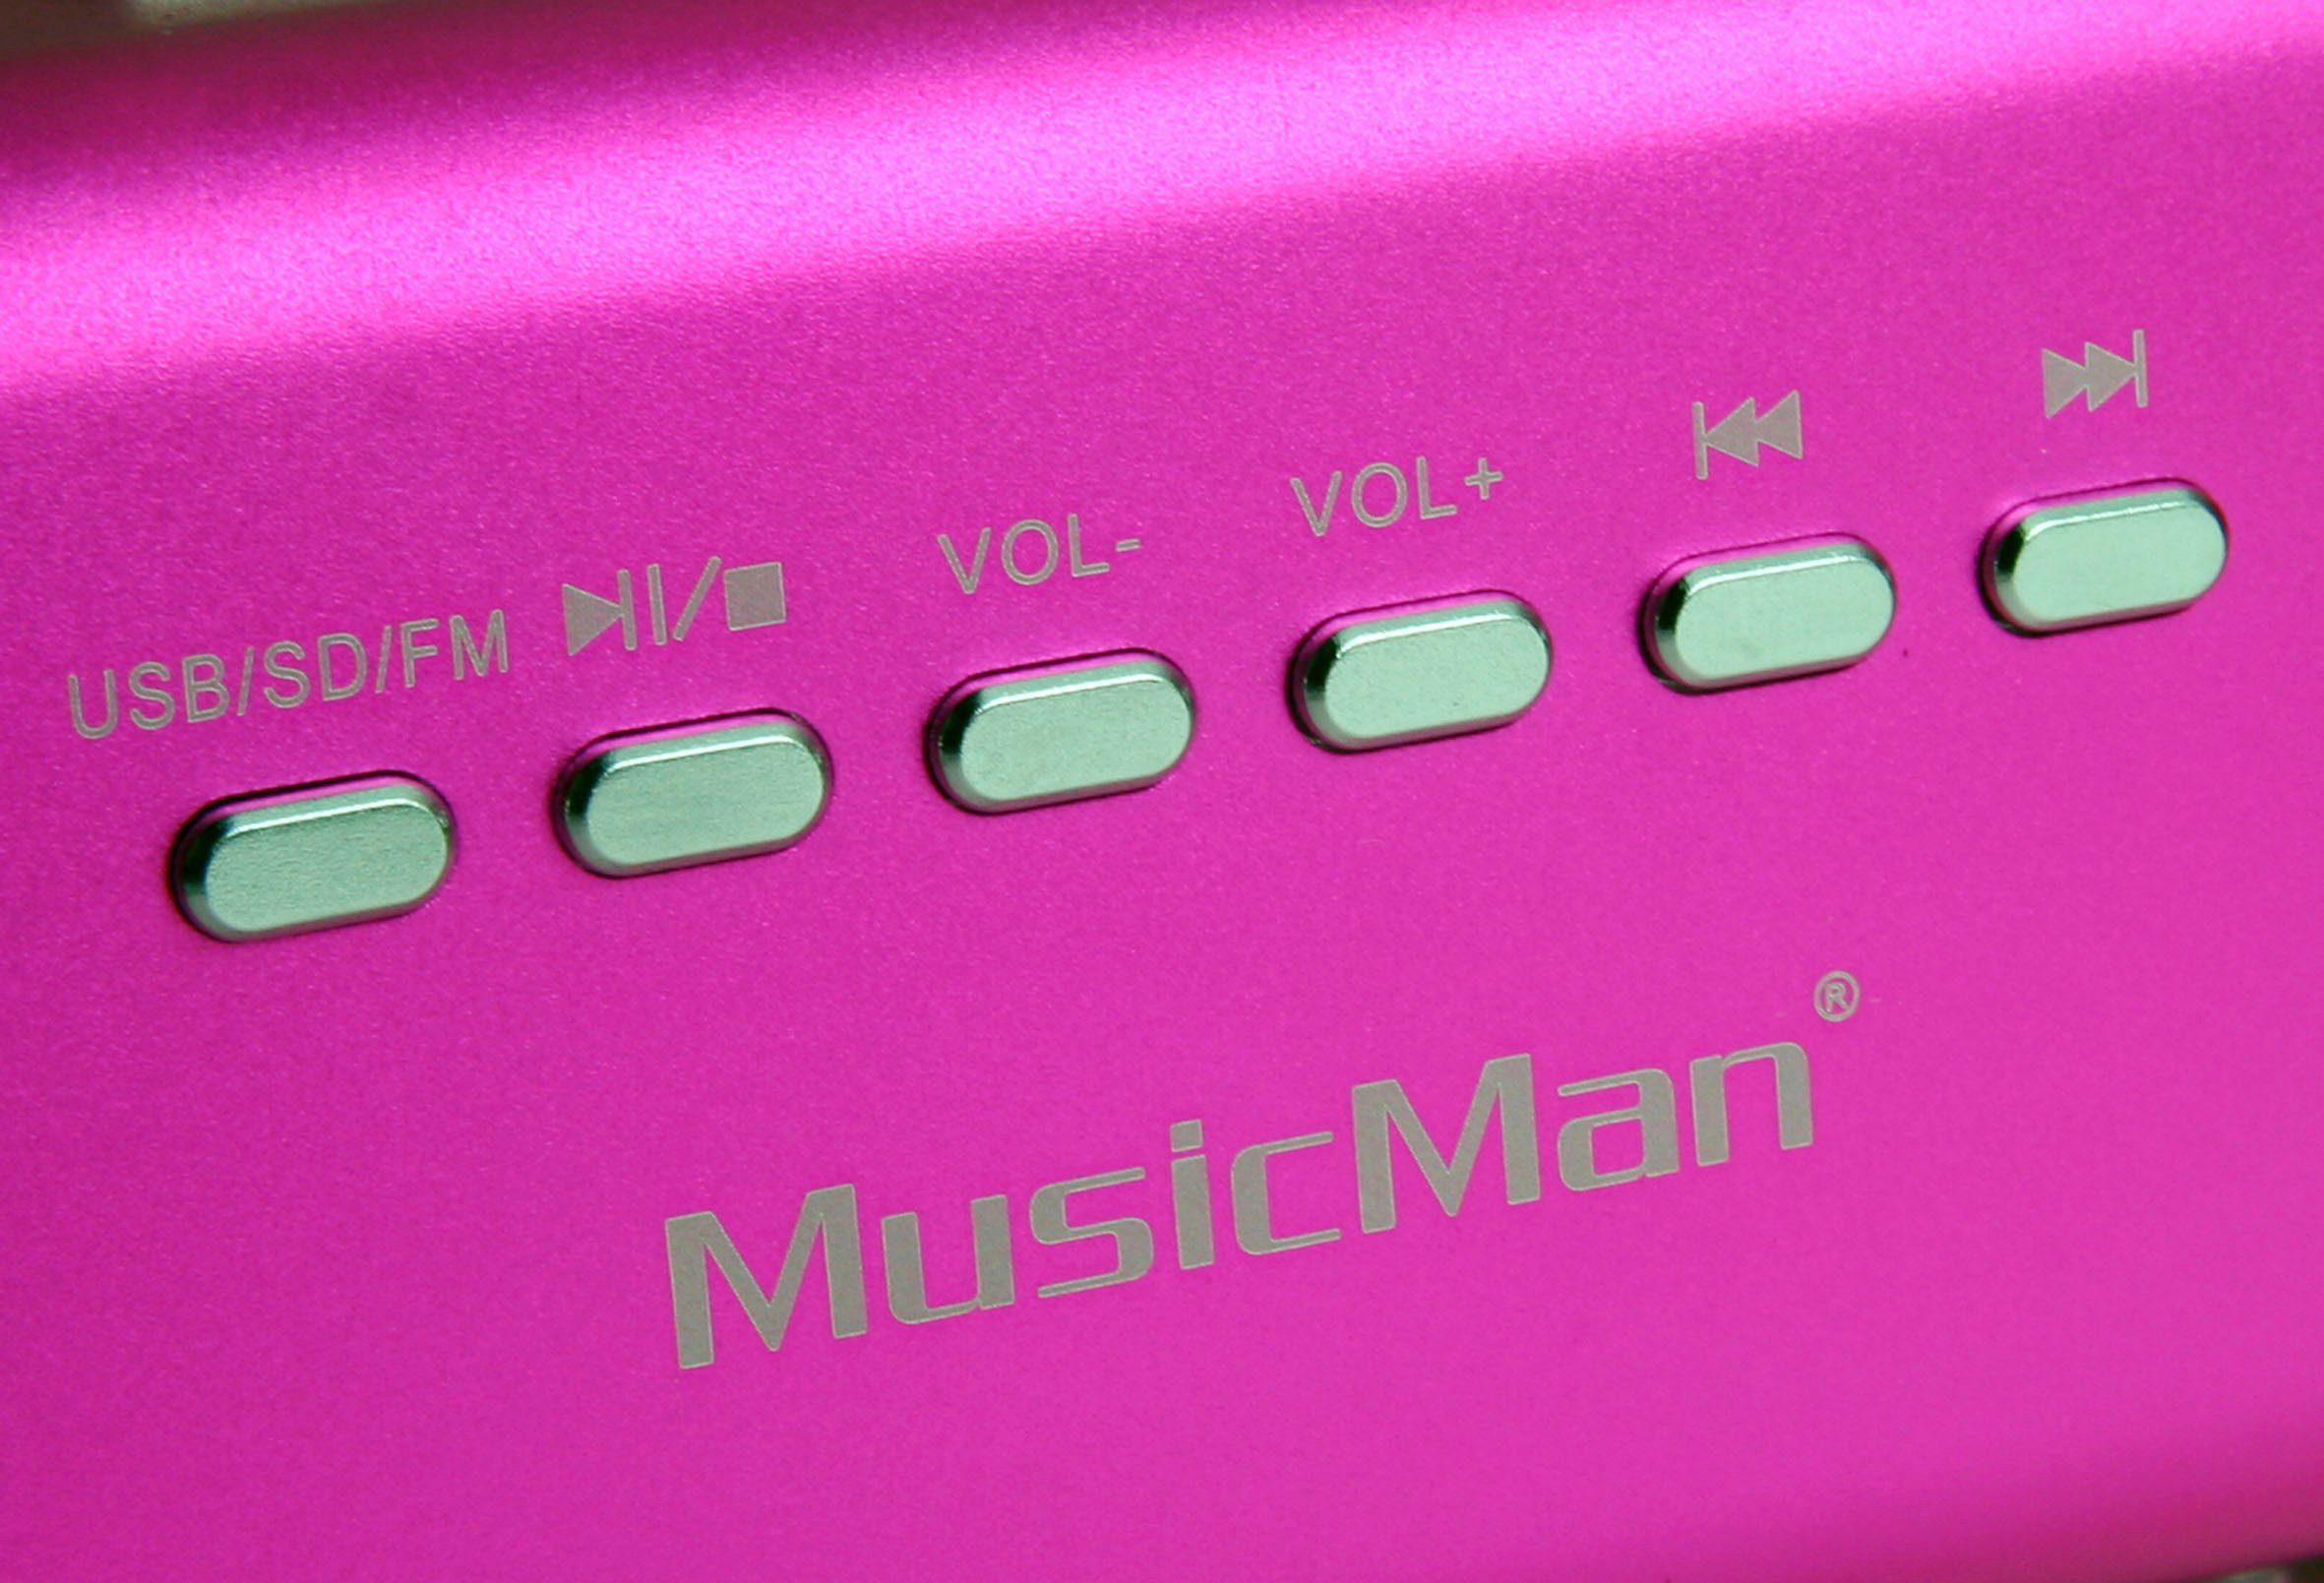 Technaxx 2.0 Soundstation W) Portable-Lautsprecher pink MA (6 MusicMan